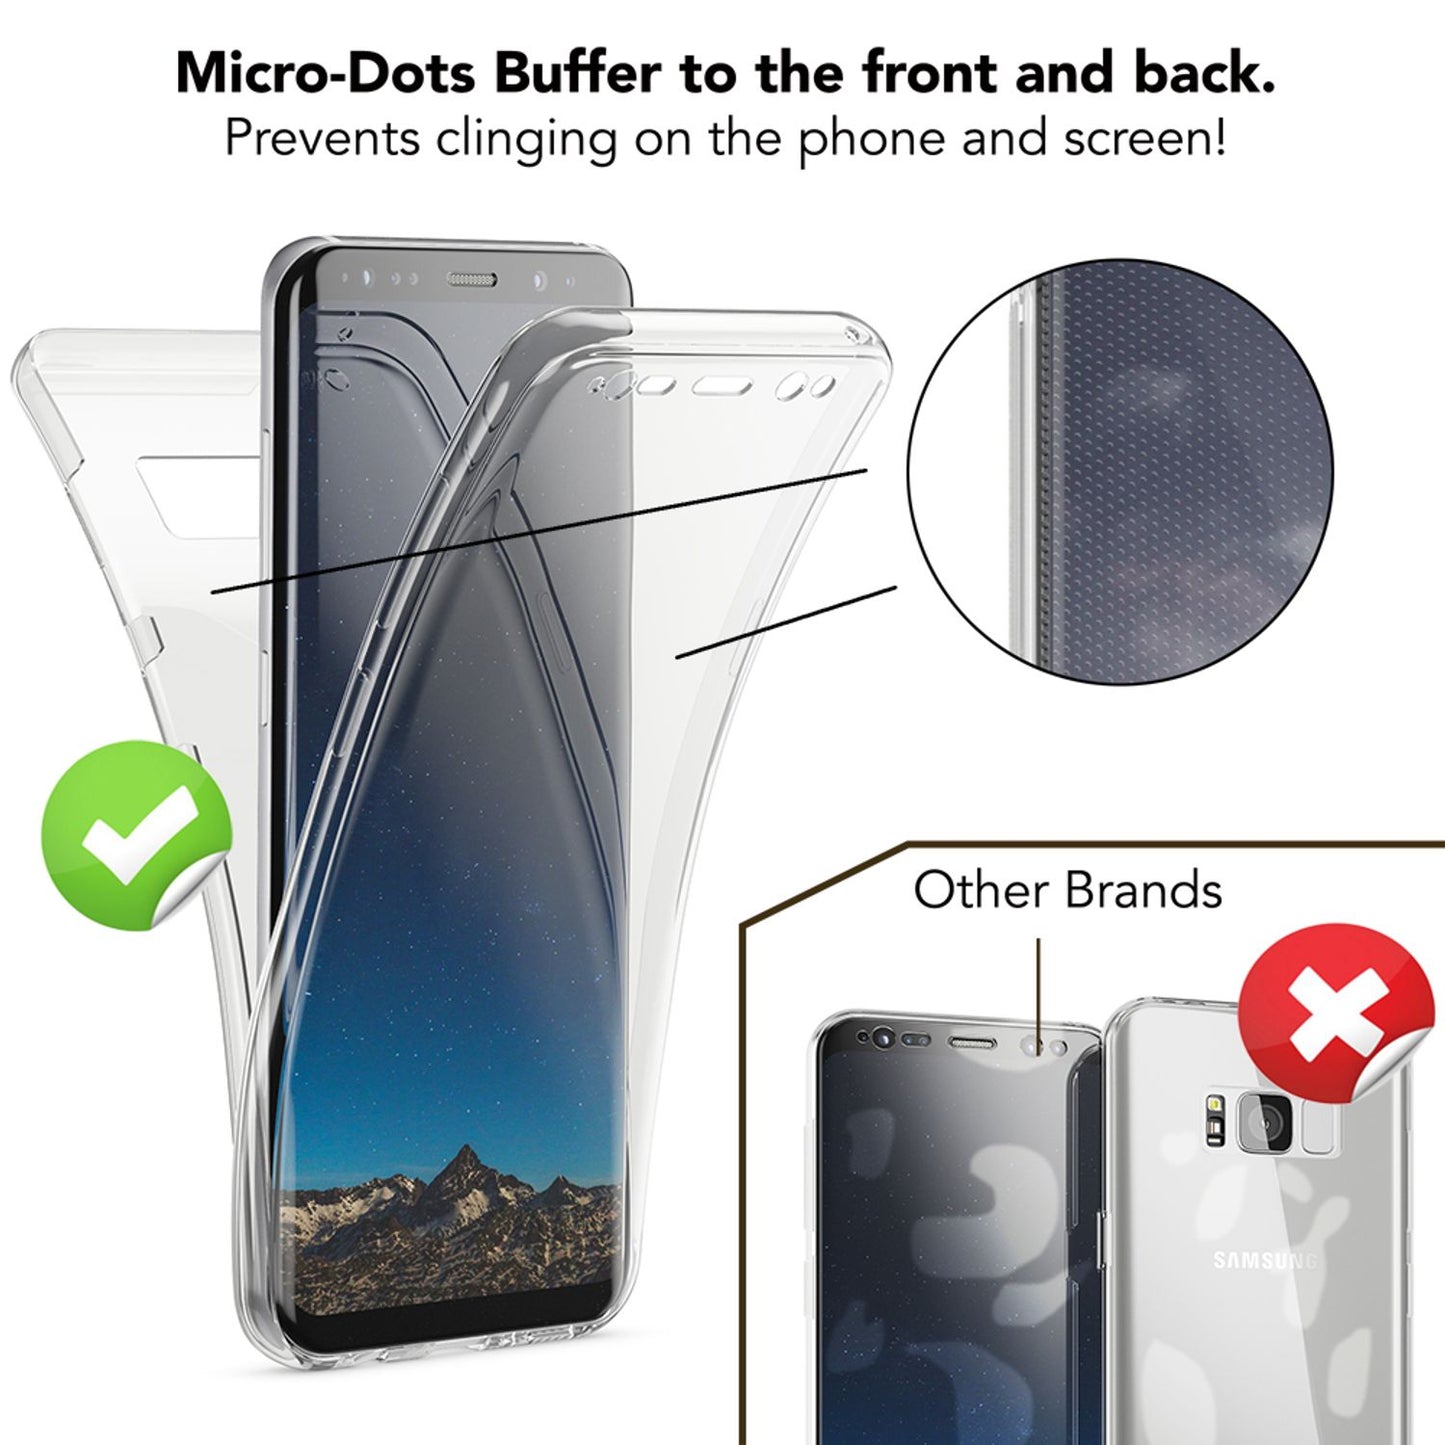 NALIA 360 Grad Hülle für Samsung Galaxy S8, Full Cover Handy Schutzhülle Case